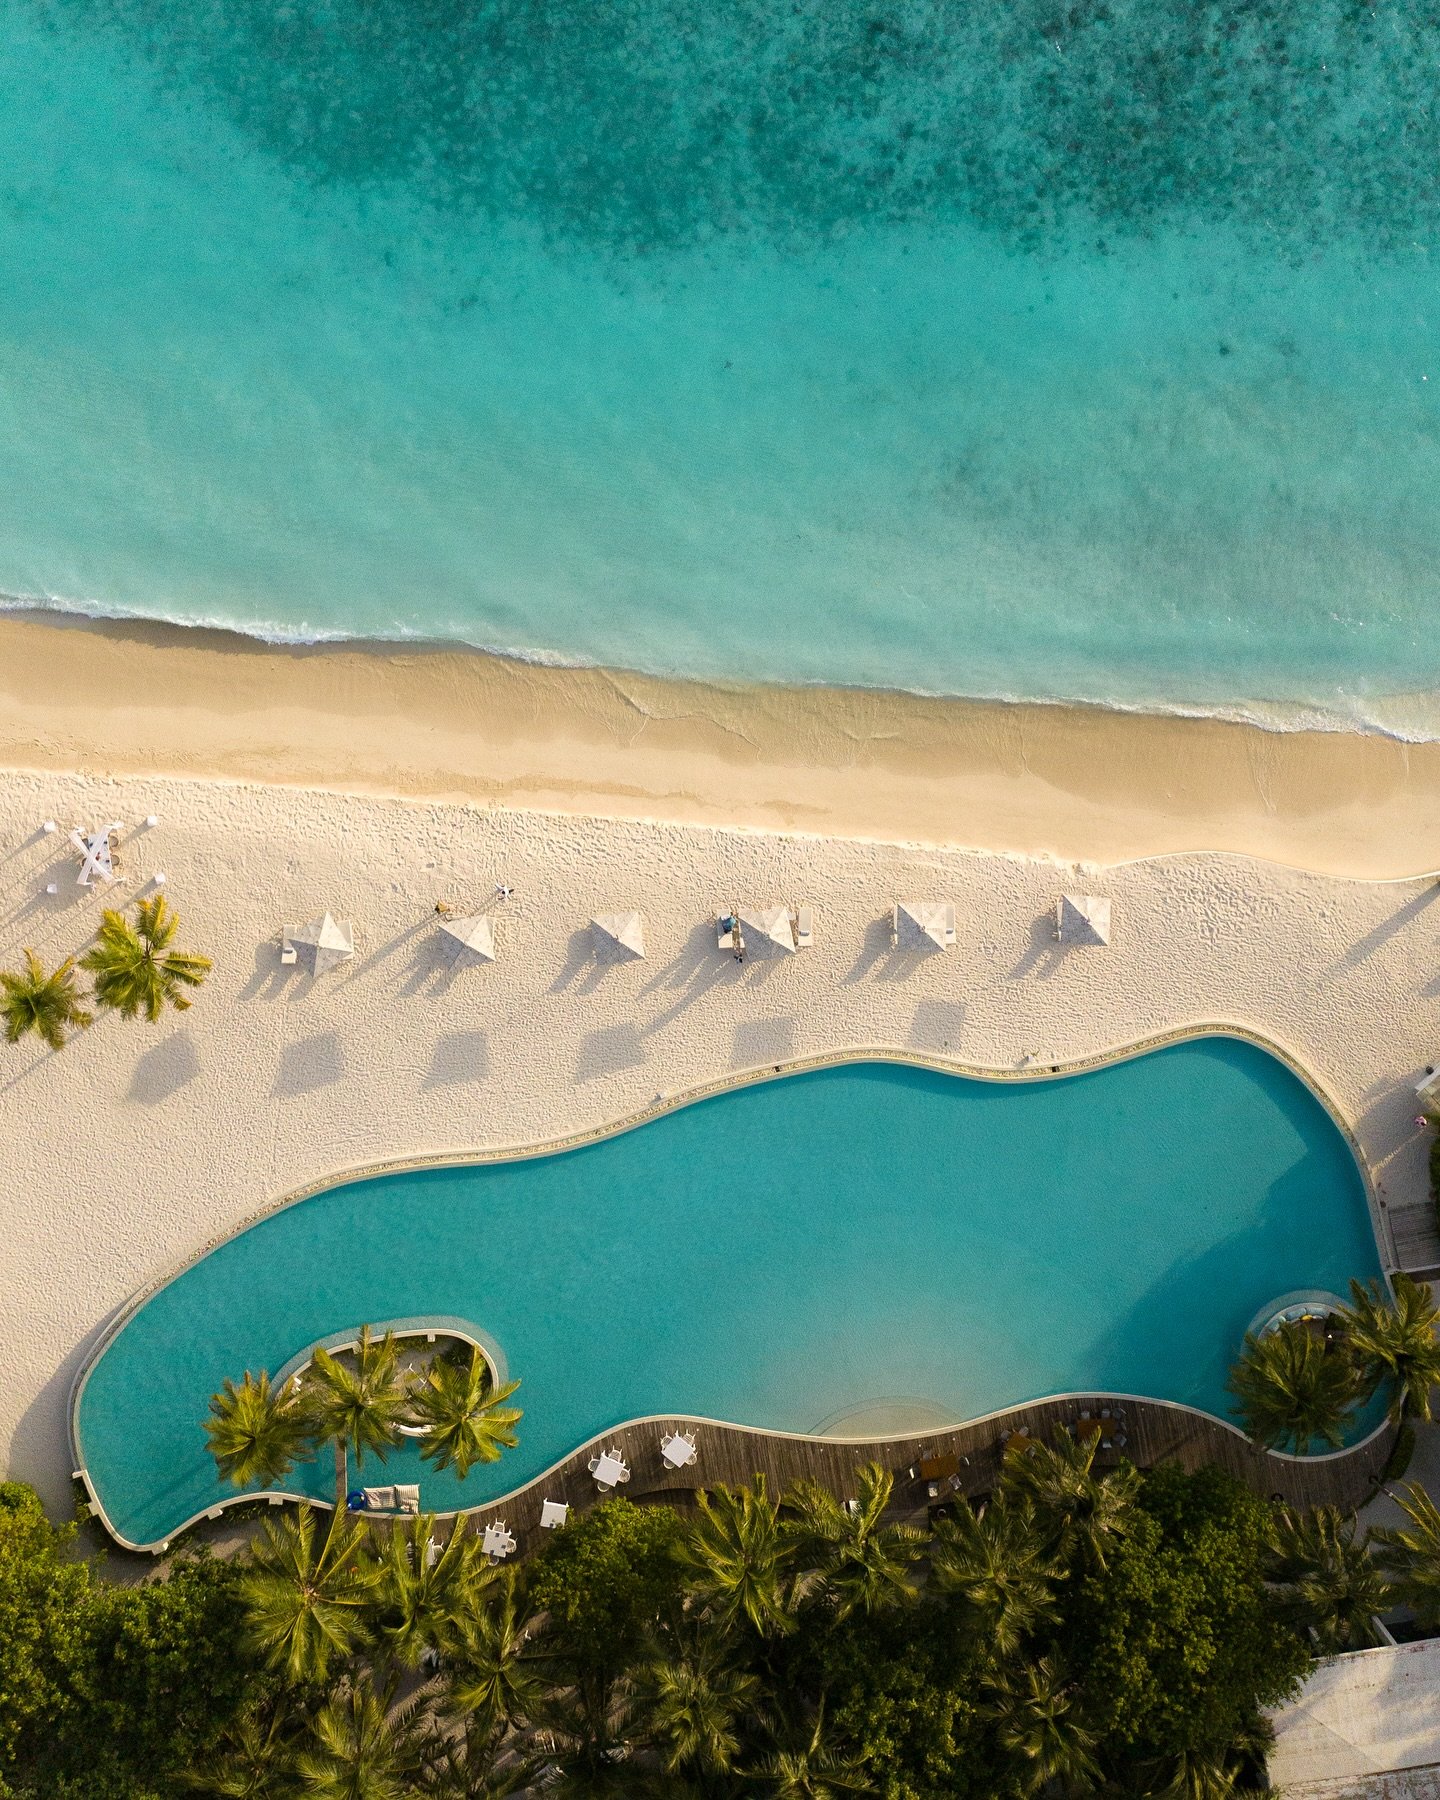 Where the jungle meets the sea 🌴🌊 

Content for @amillamaldives &mdash; a member of @mrandmrssmith 🤍